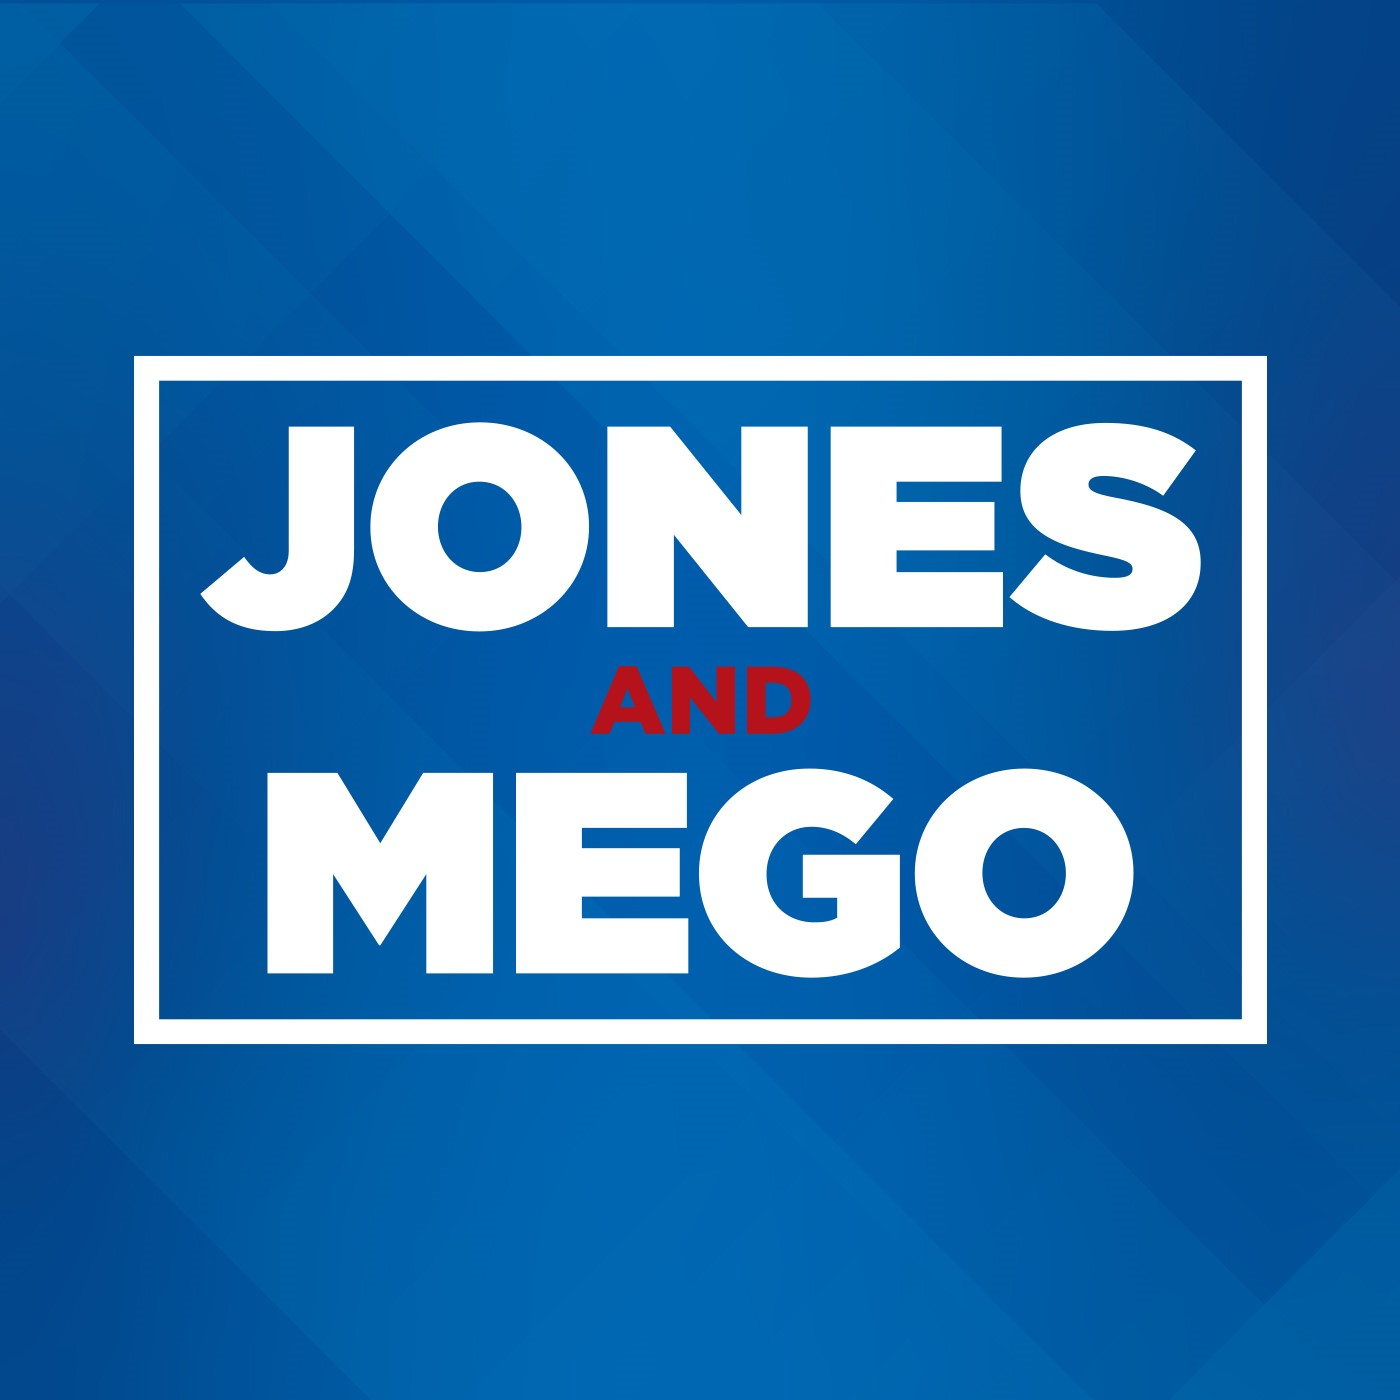 Breaking News: Alex Cora will be joining Jones & Mego this season!